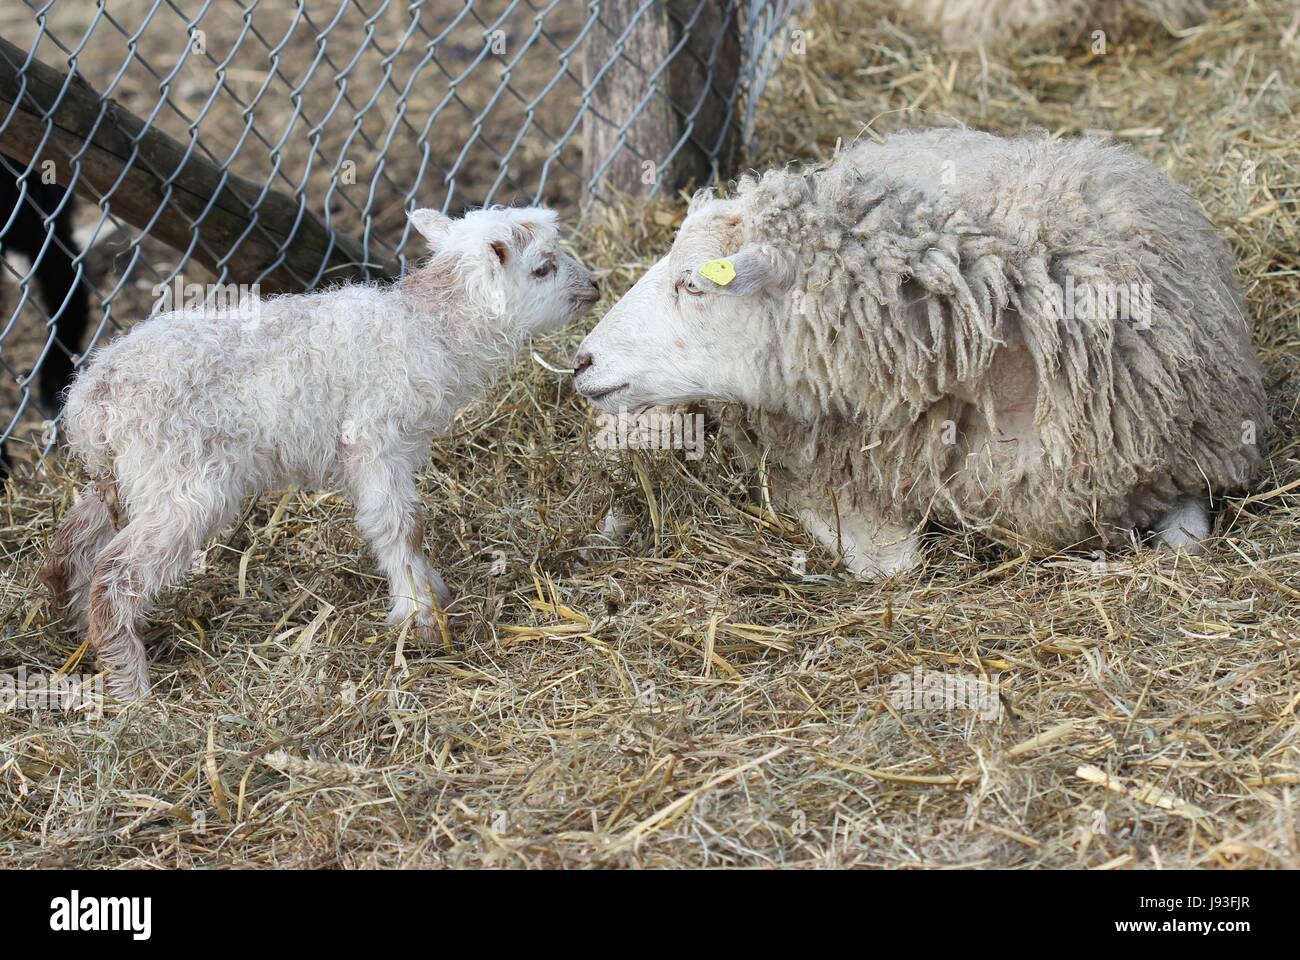 skuddenschaf with newborn lamb Stock Photo